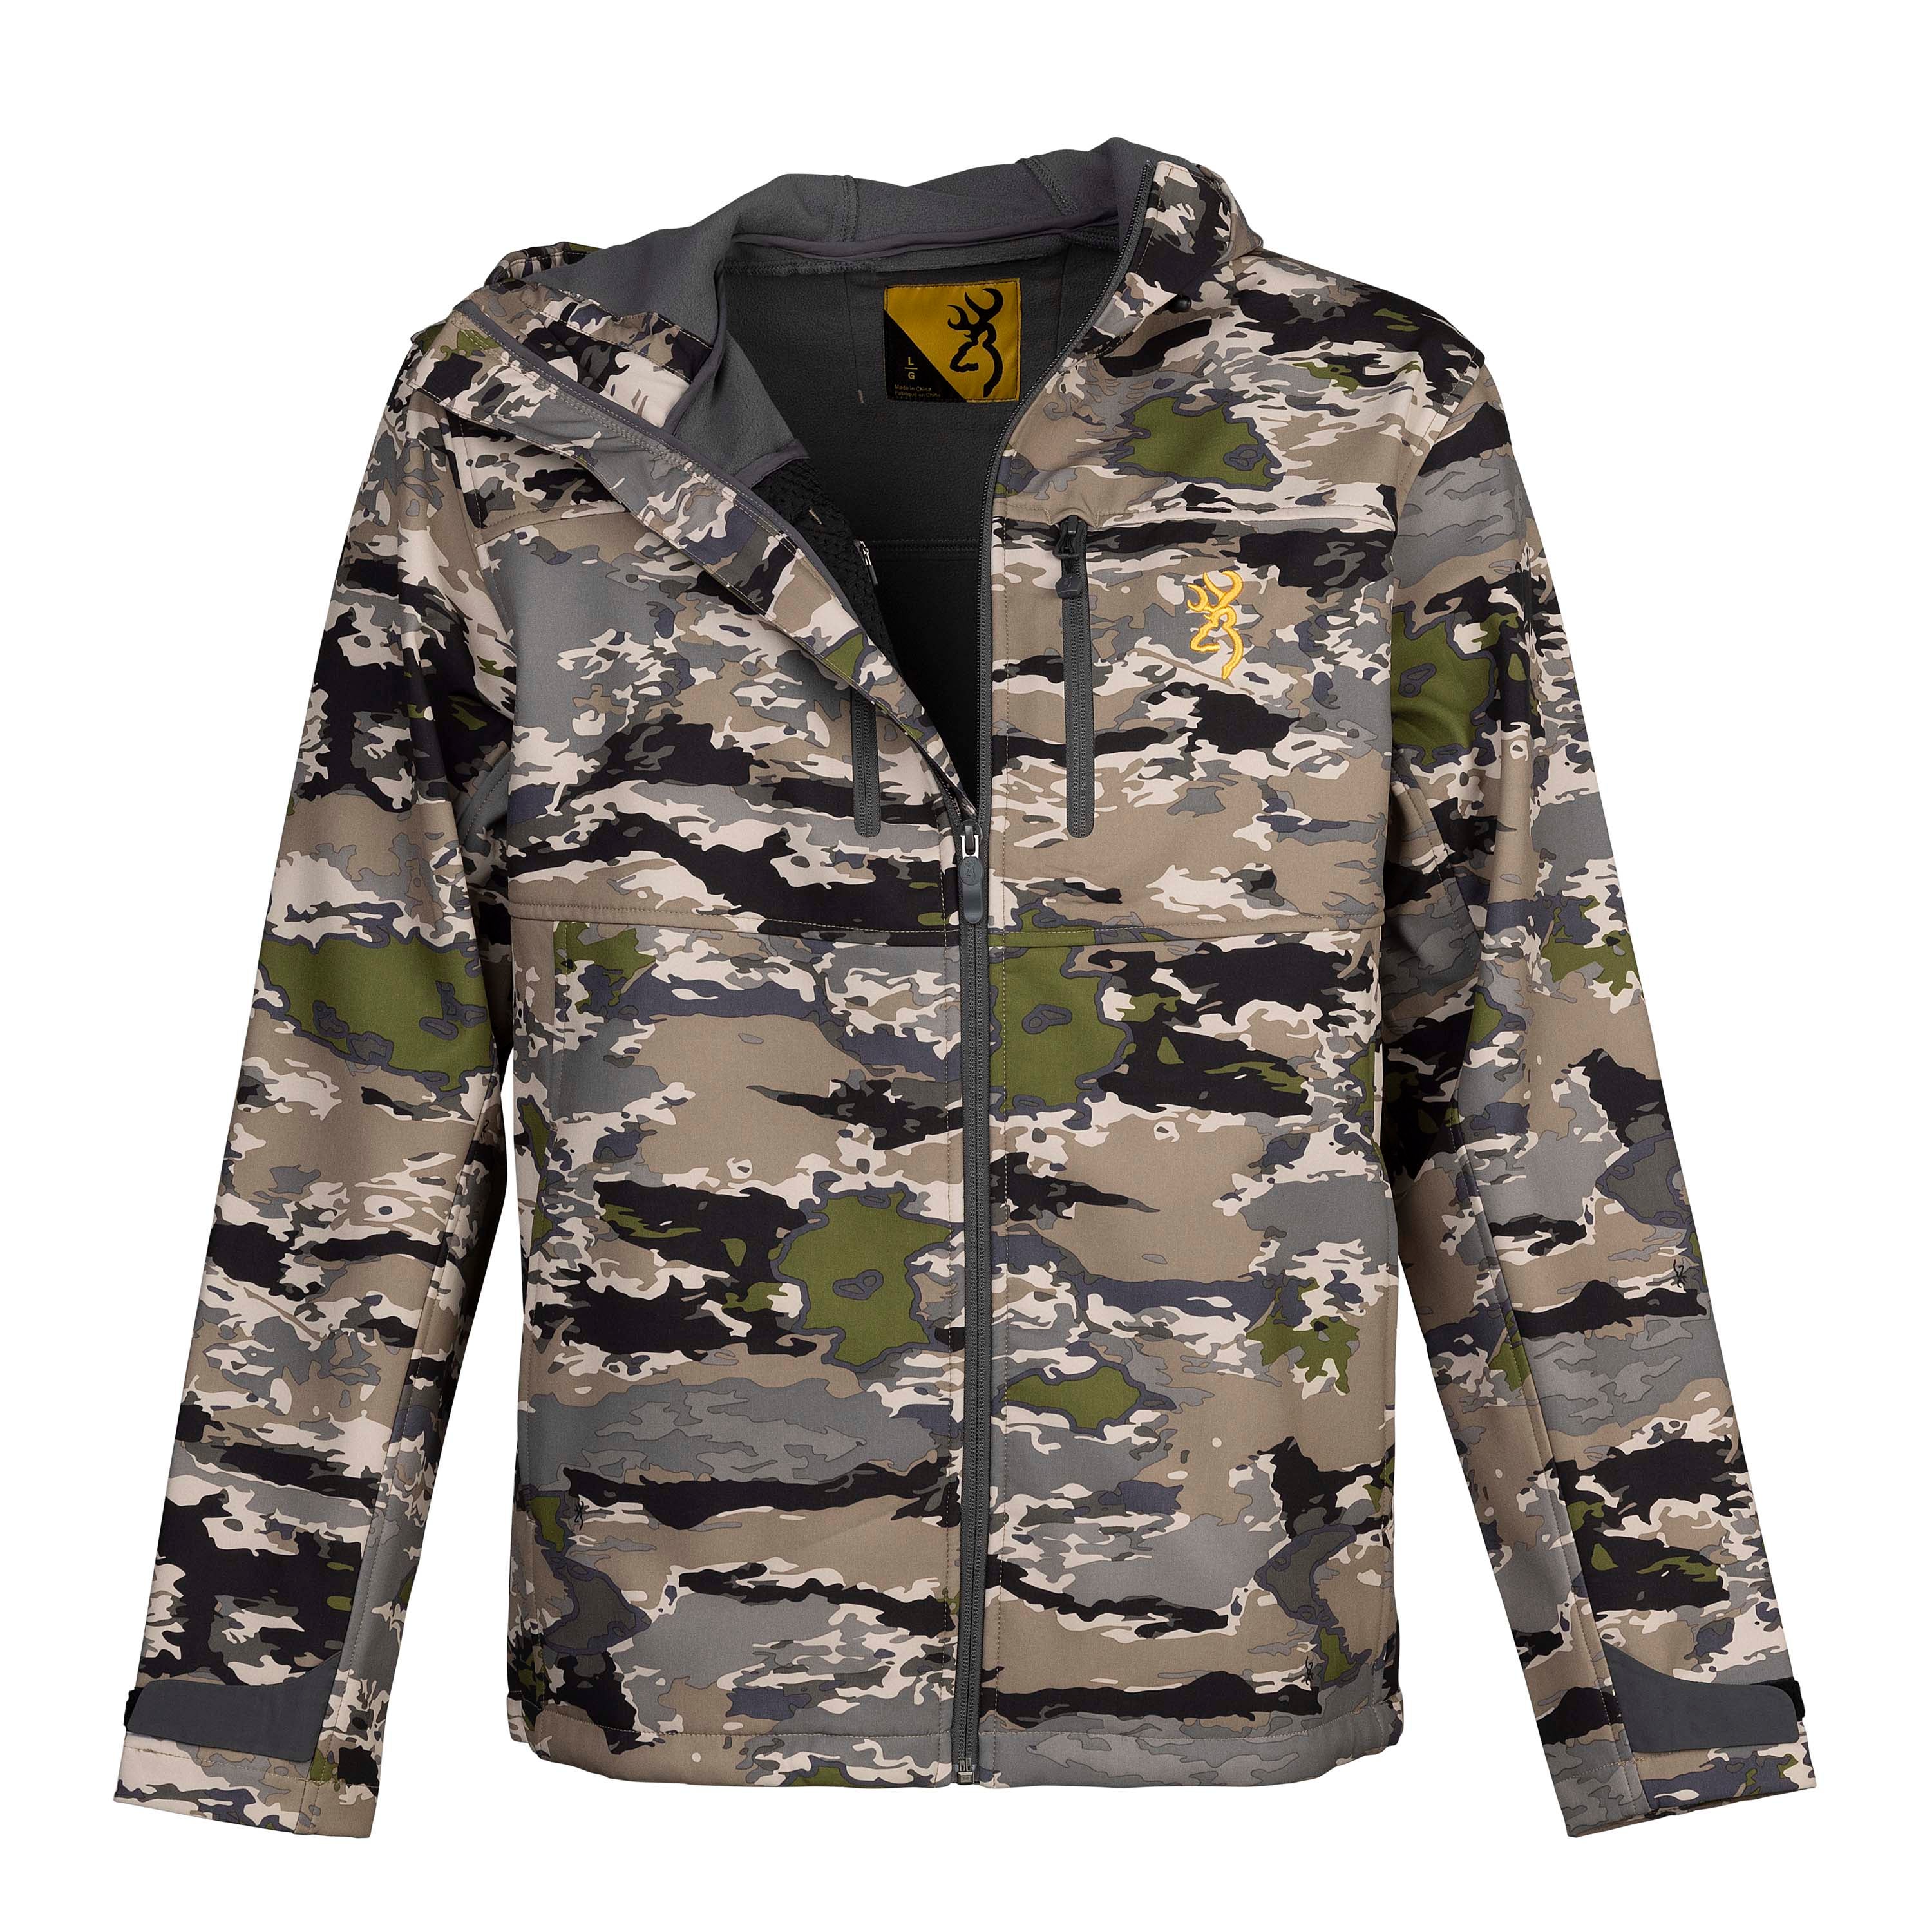 Pahvant Pro Jacket - Hunting Clothing - Browning